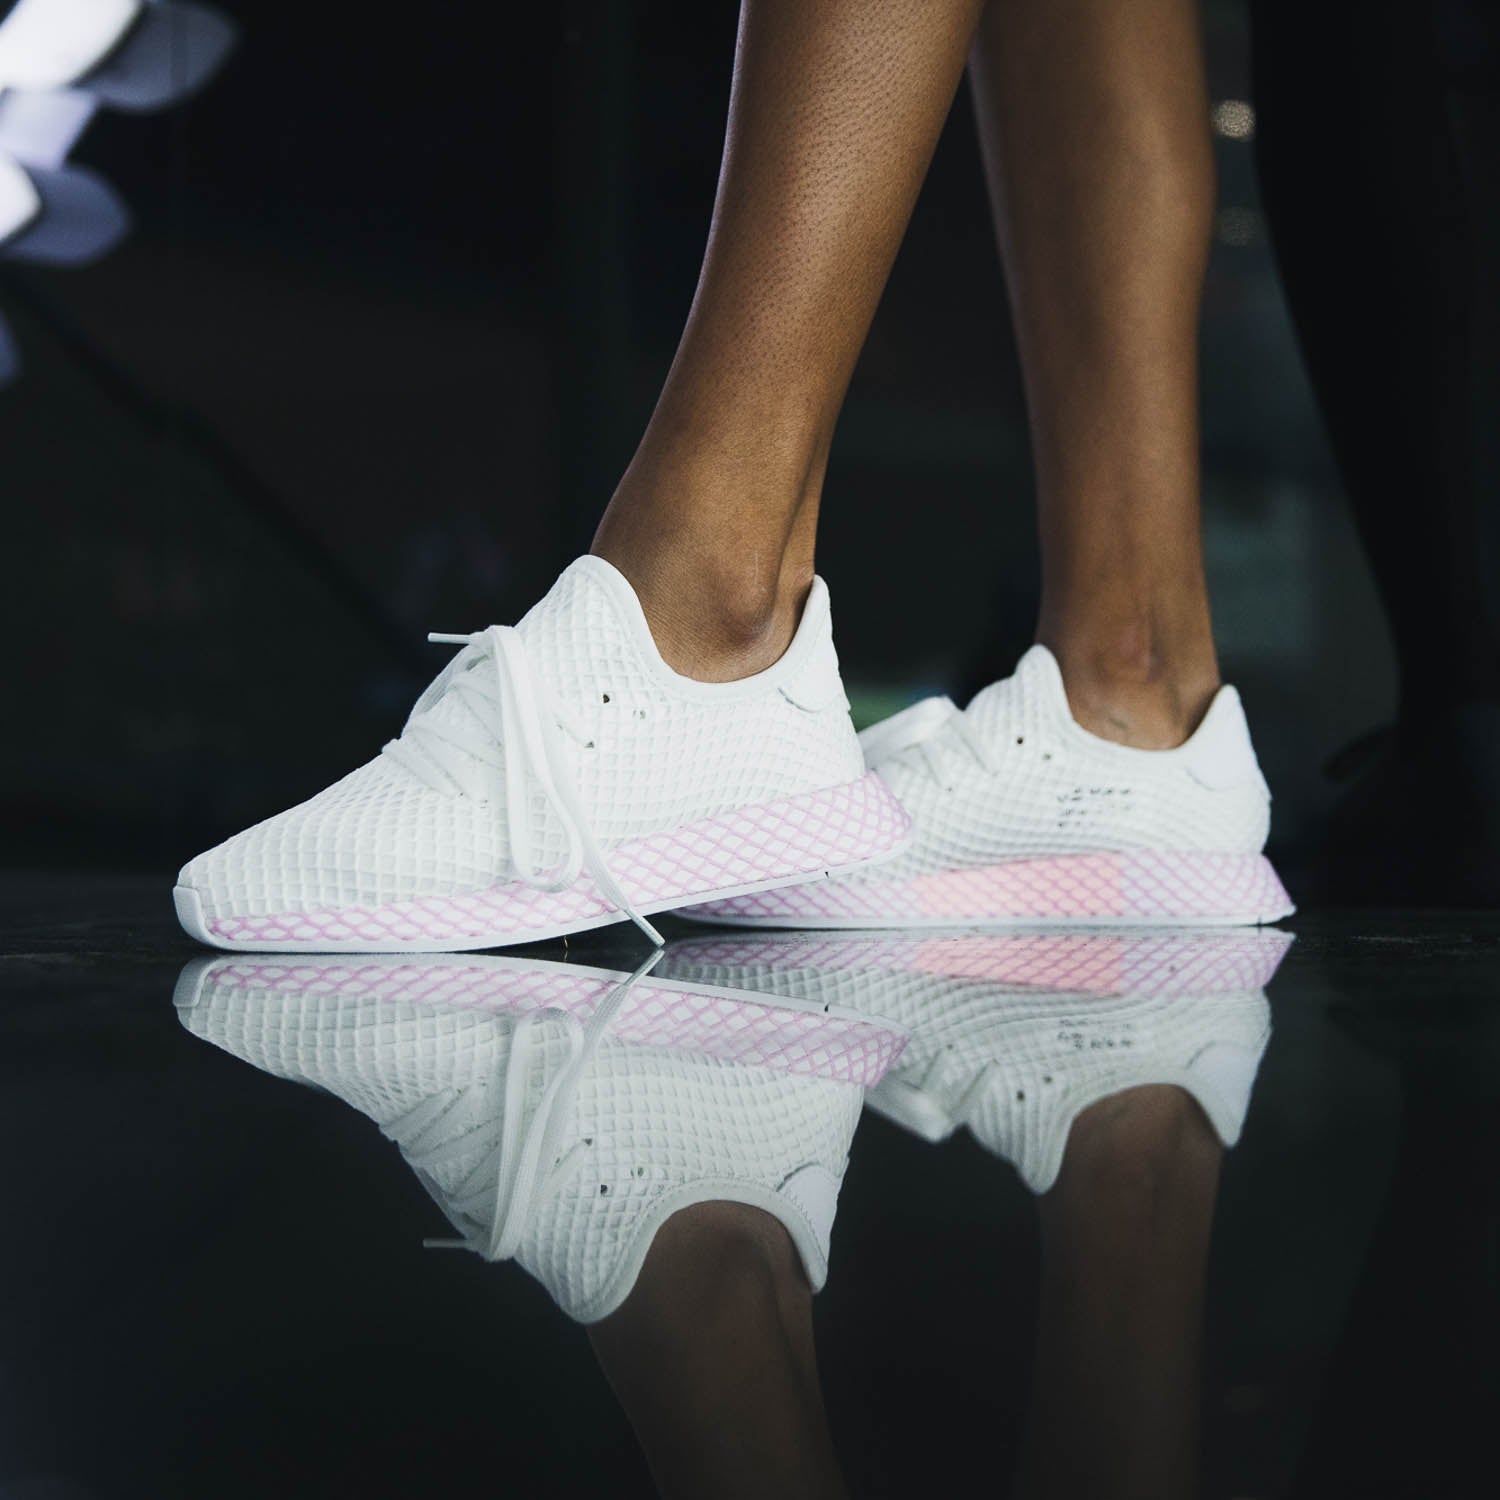 adidas deerupt white on feet